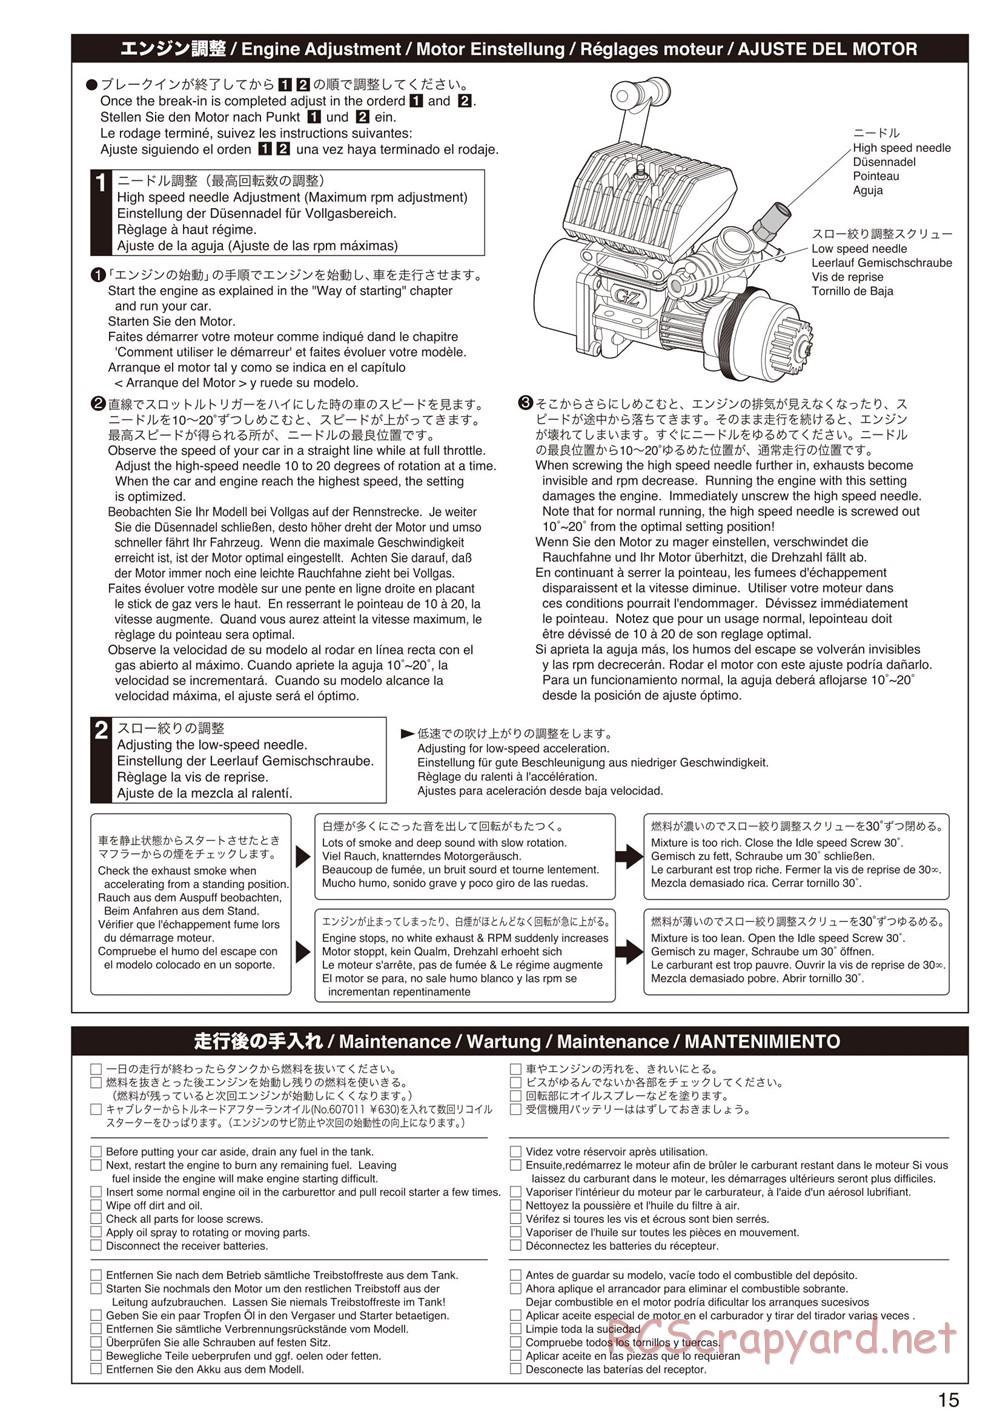 Kyosho - Birel R31-SE Kart - Manual - Page 15